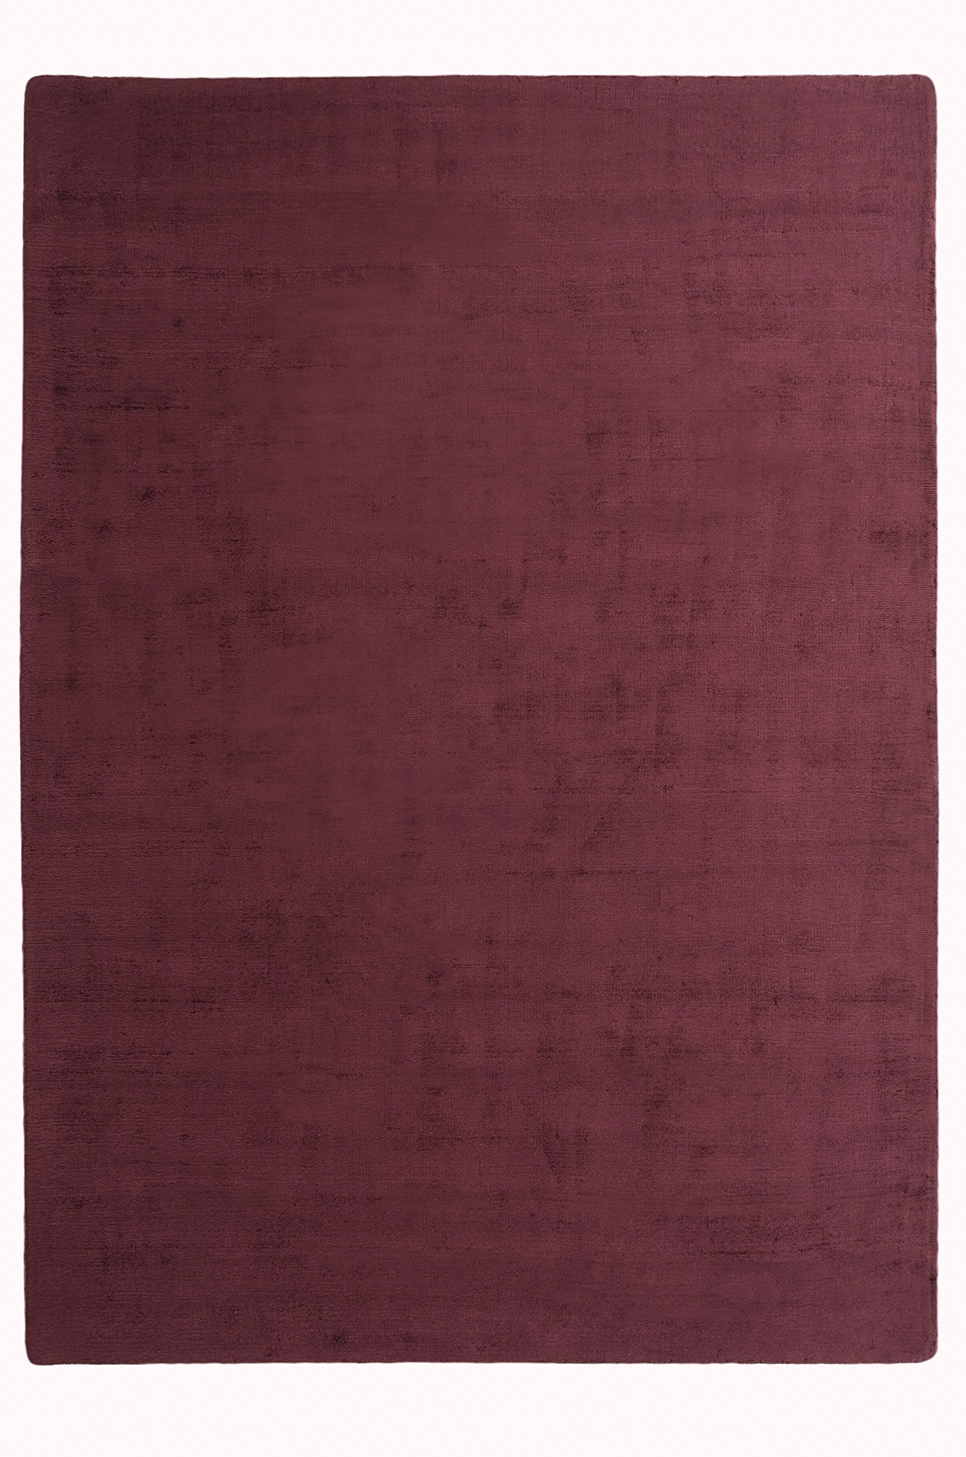 Load image into Gallery viewer, Rugs Winterbloom Purple Rug - 120 x 180 cm